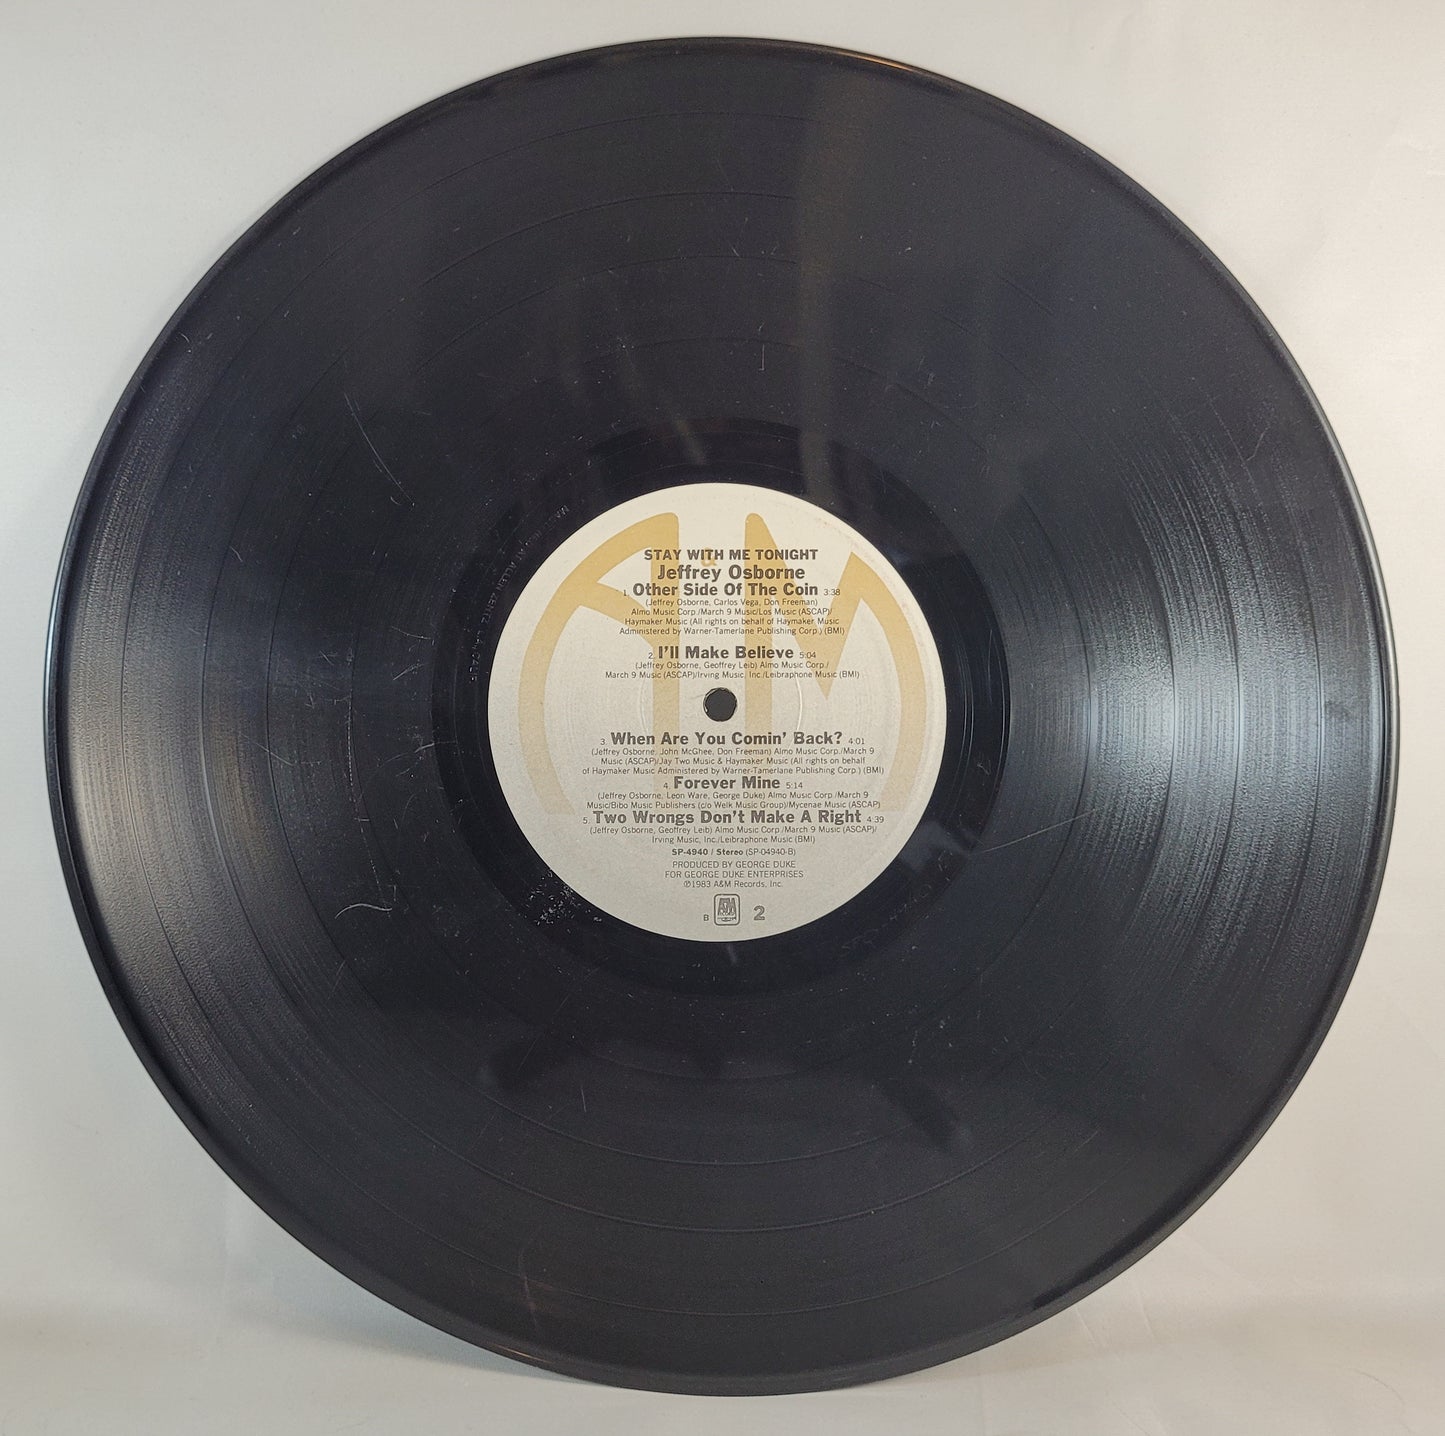 Jeffrey Osborne - Stay With me Tonight [Vinyl Record LP]